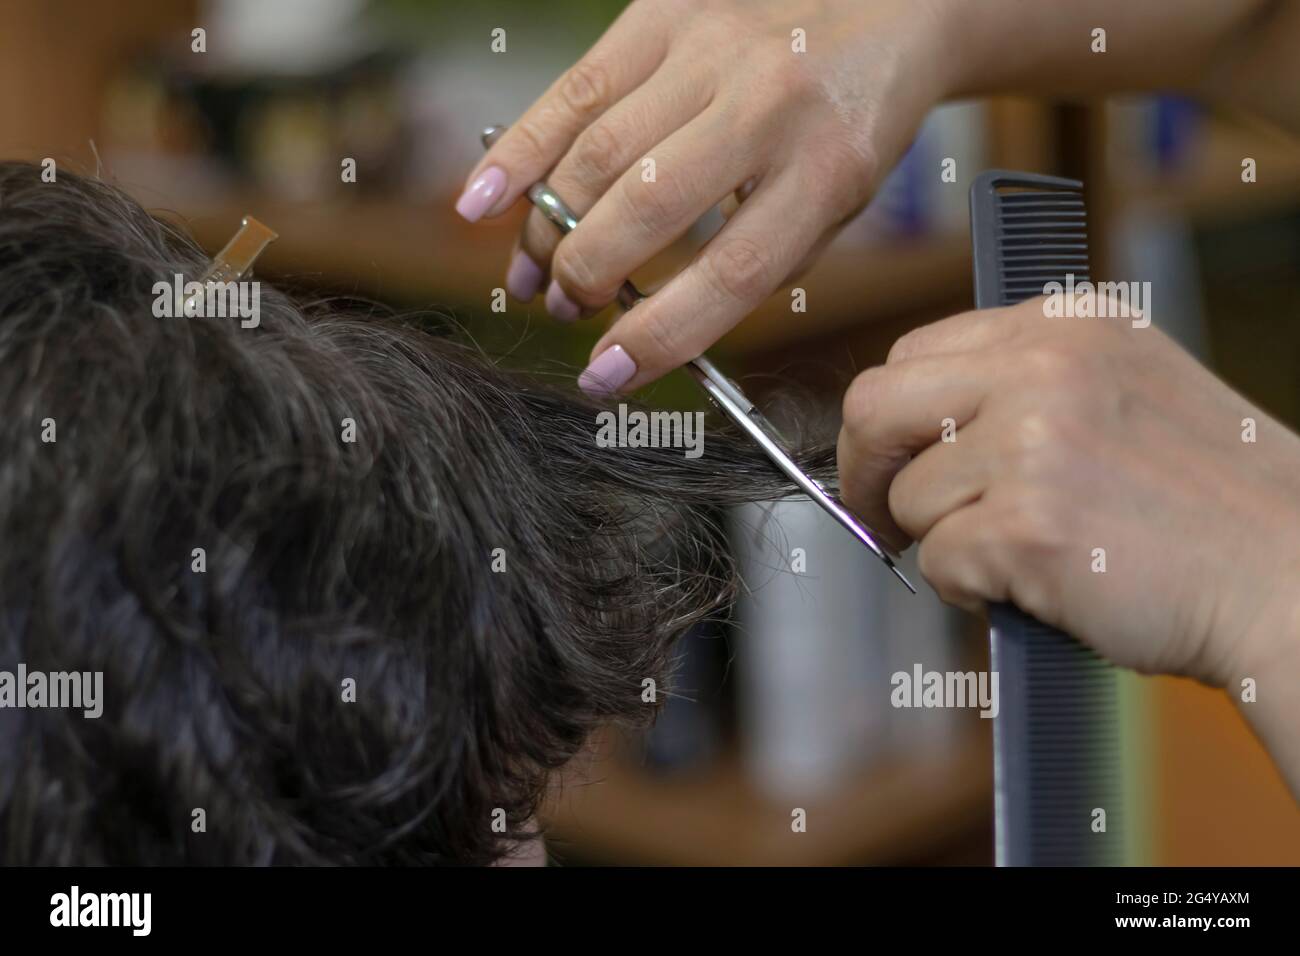 female hands doing a haircut on dark hair. soft focus Stock Photo